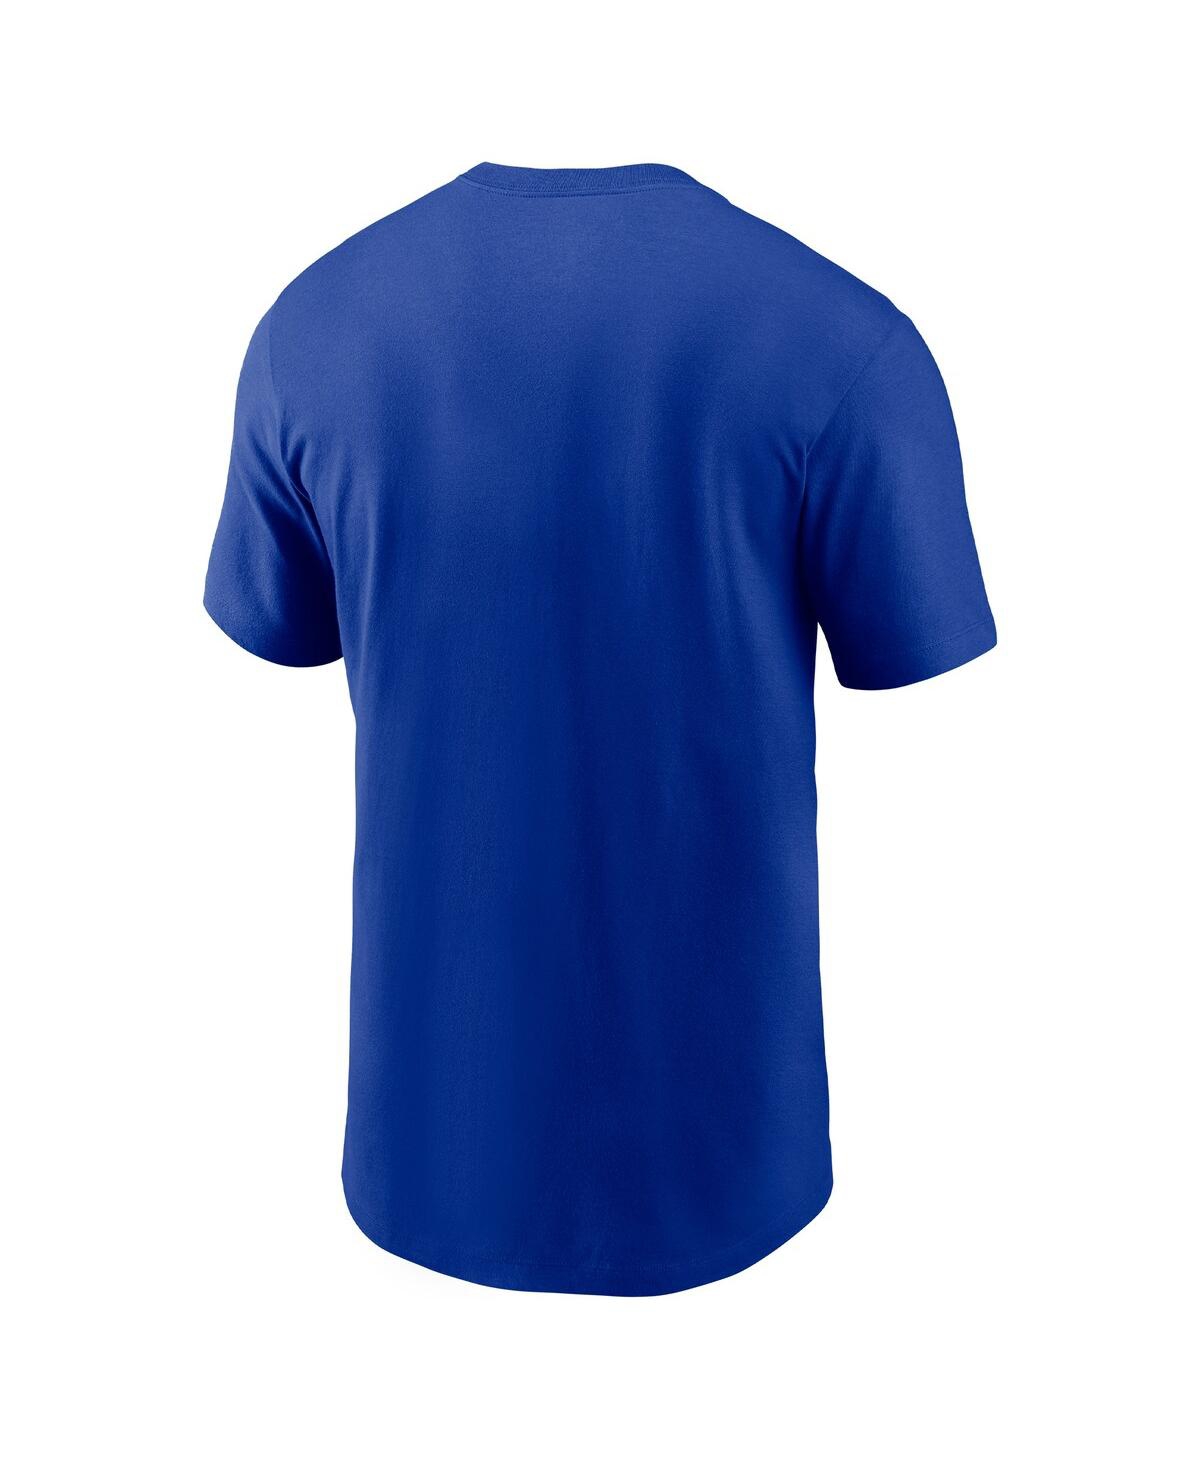 Shop Nike Men's  Royal Buffalo Bills 2022 Training Camp Athletic T-shirt